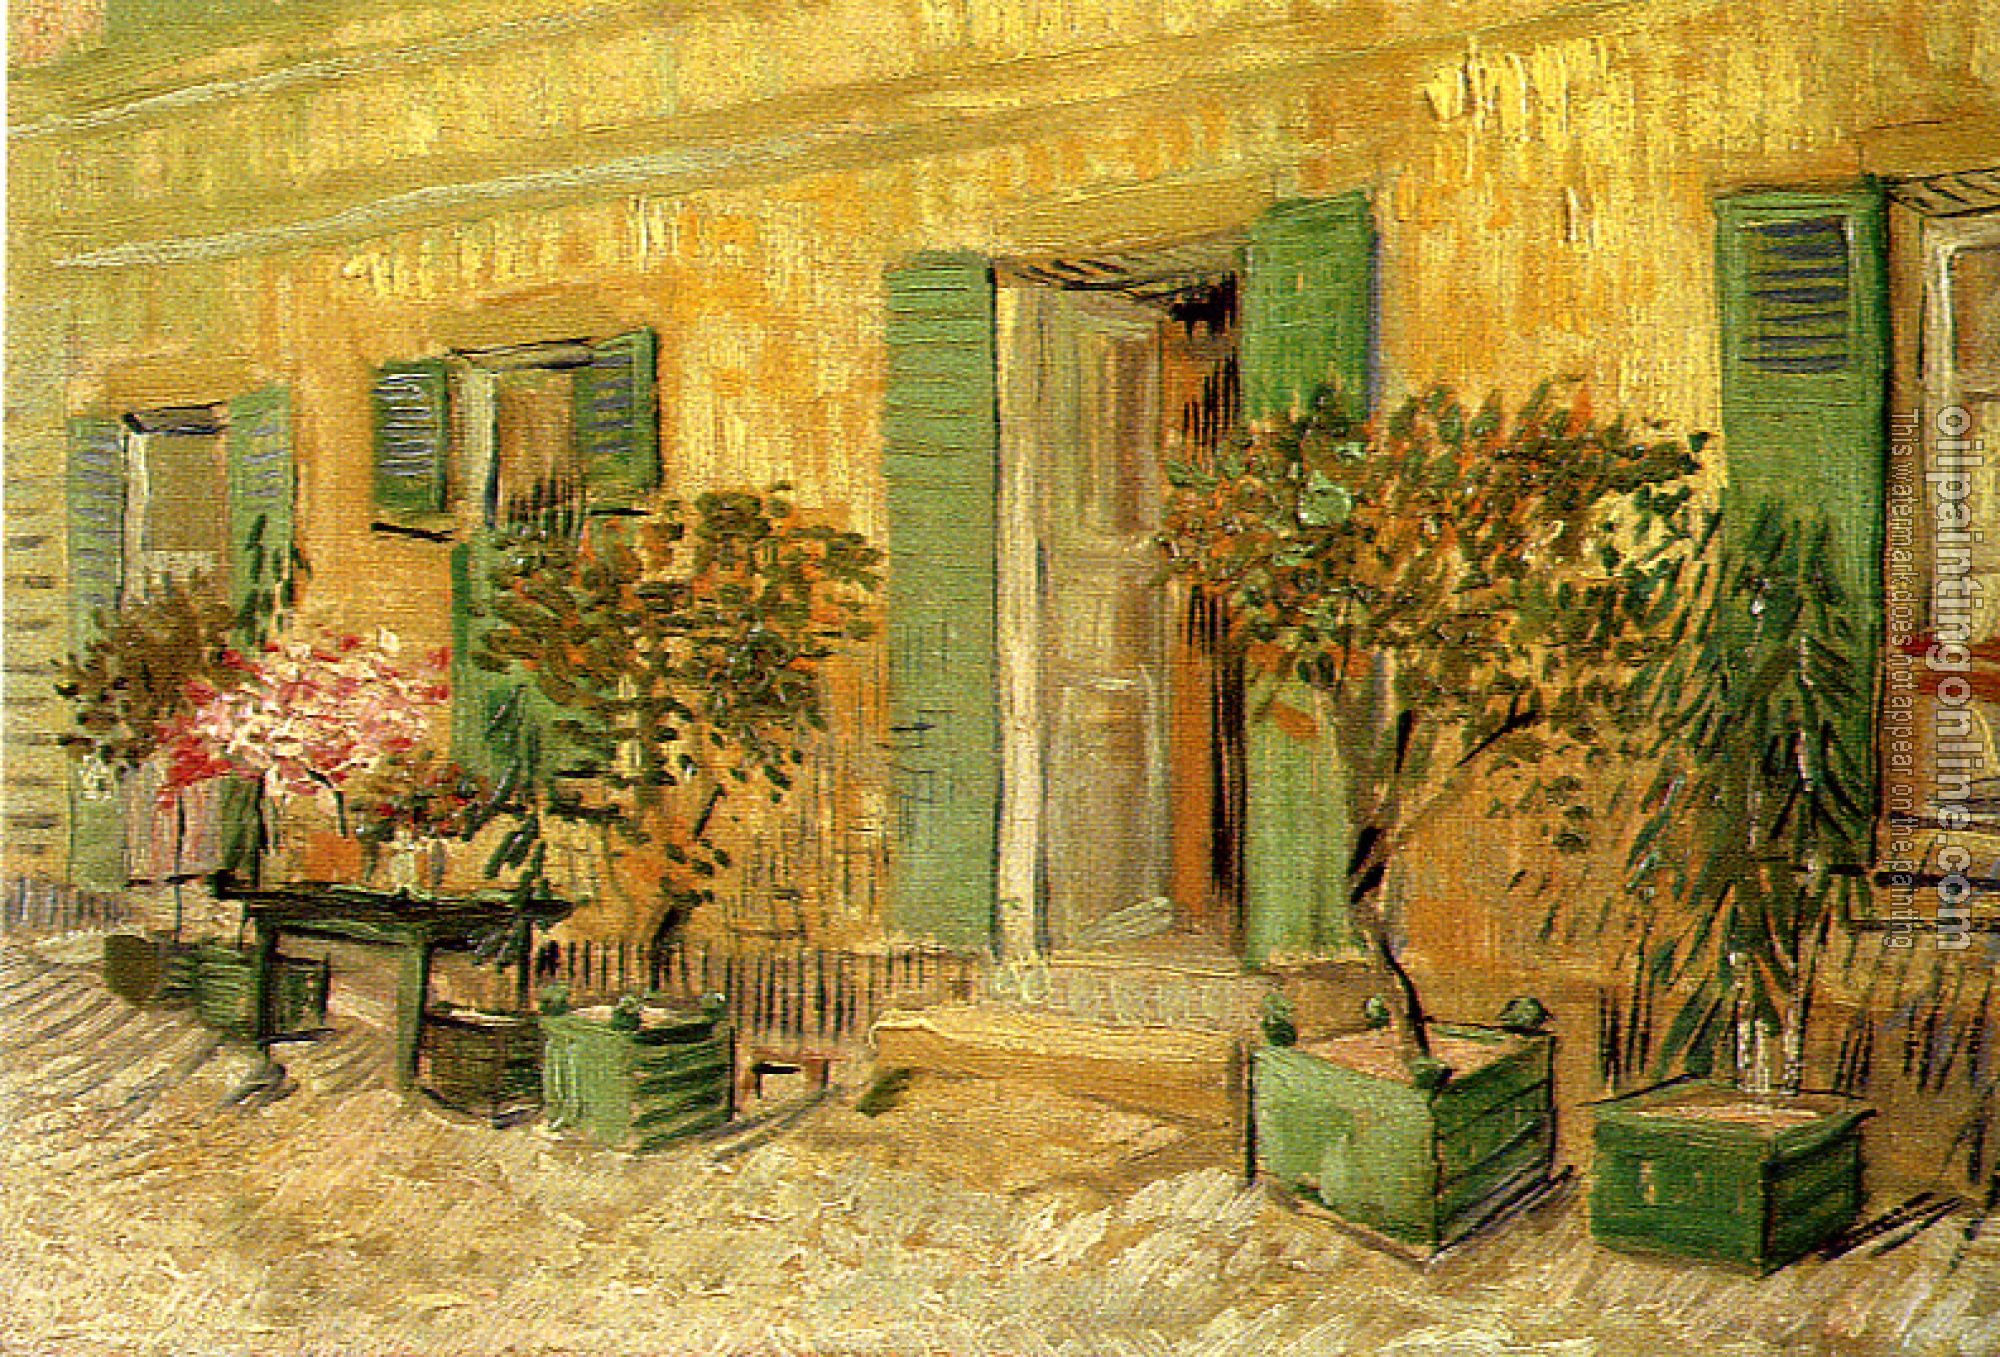 Gogh, Vincent van - Exterior of a Restaurant with Oleanders in Pots